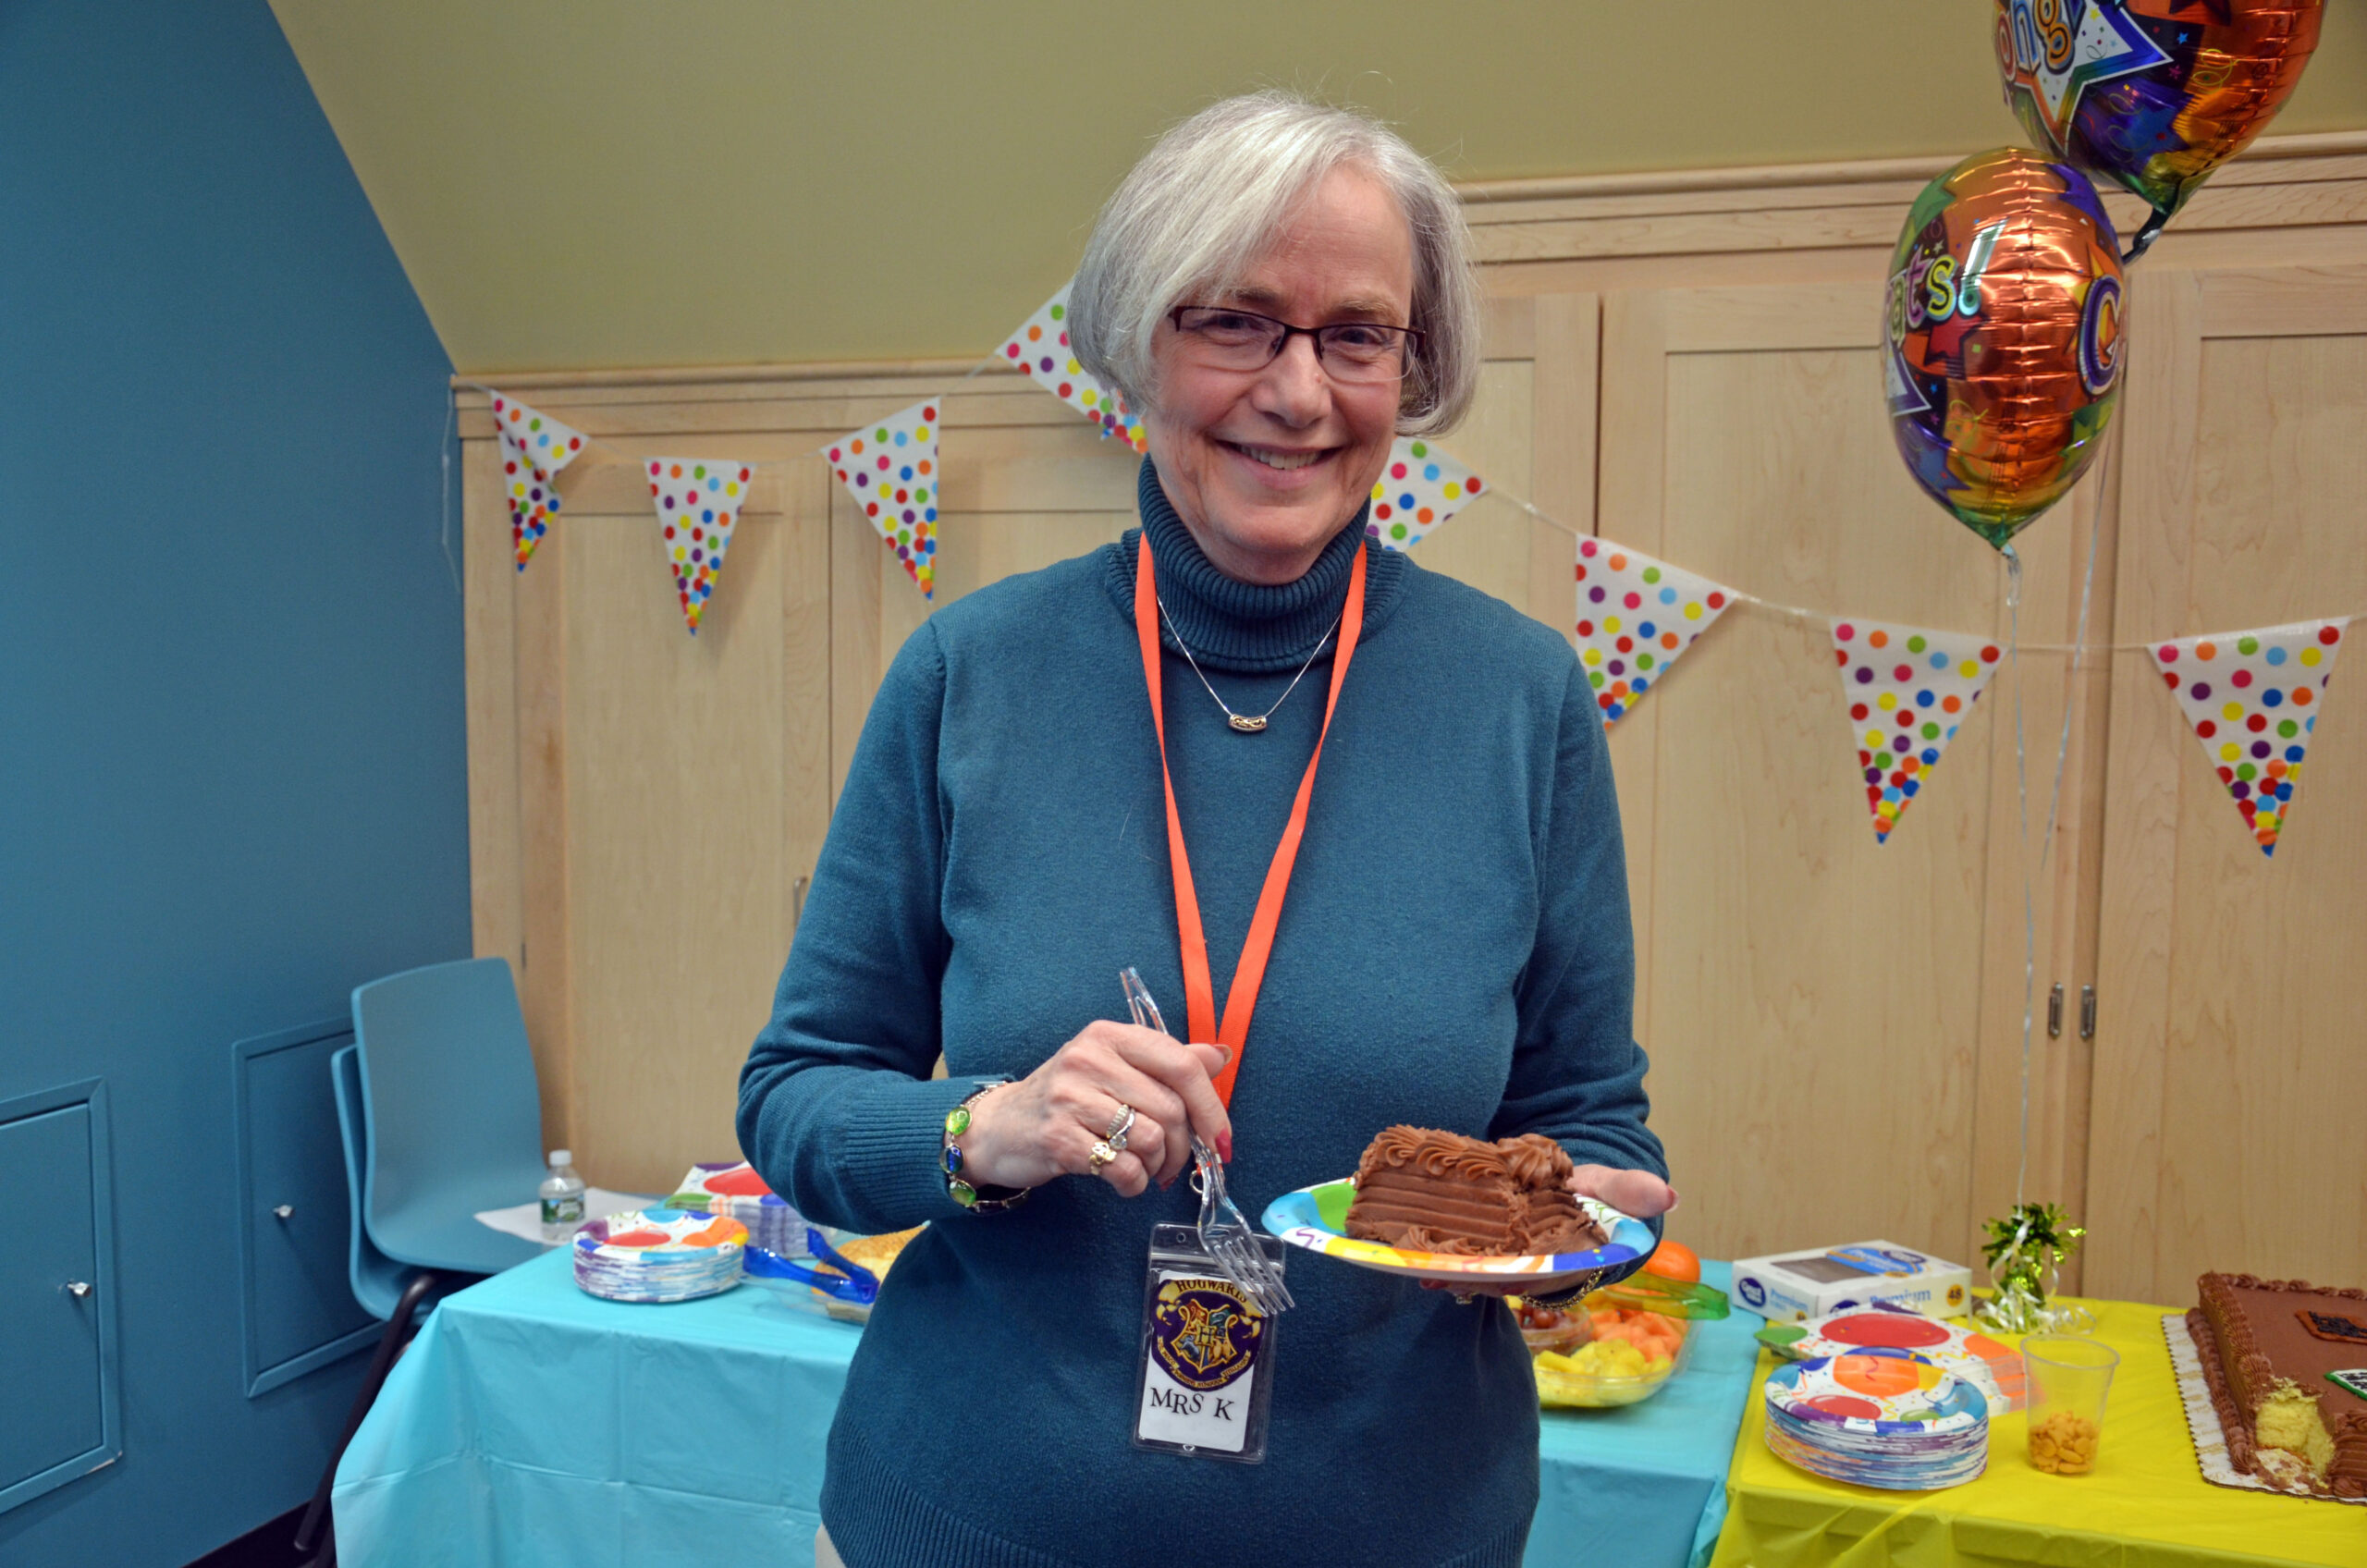 Children’s librarian Denise Kofron feted at retirement celebration